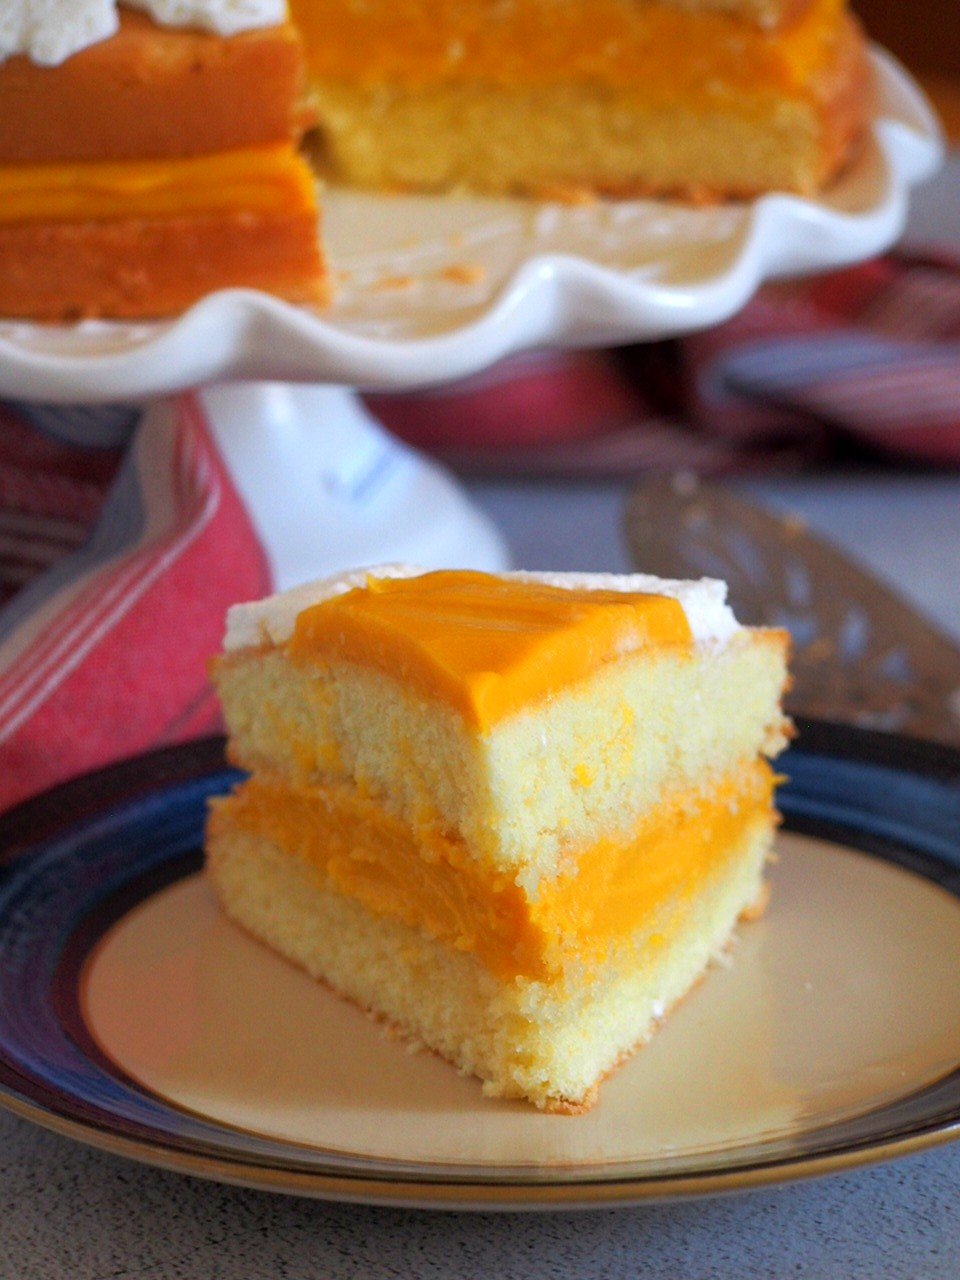 One slice of mango cream cake on a plate.